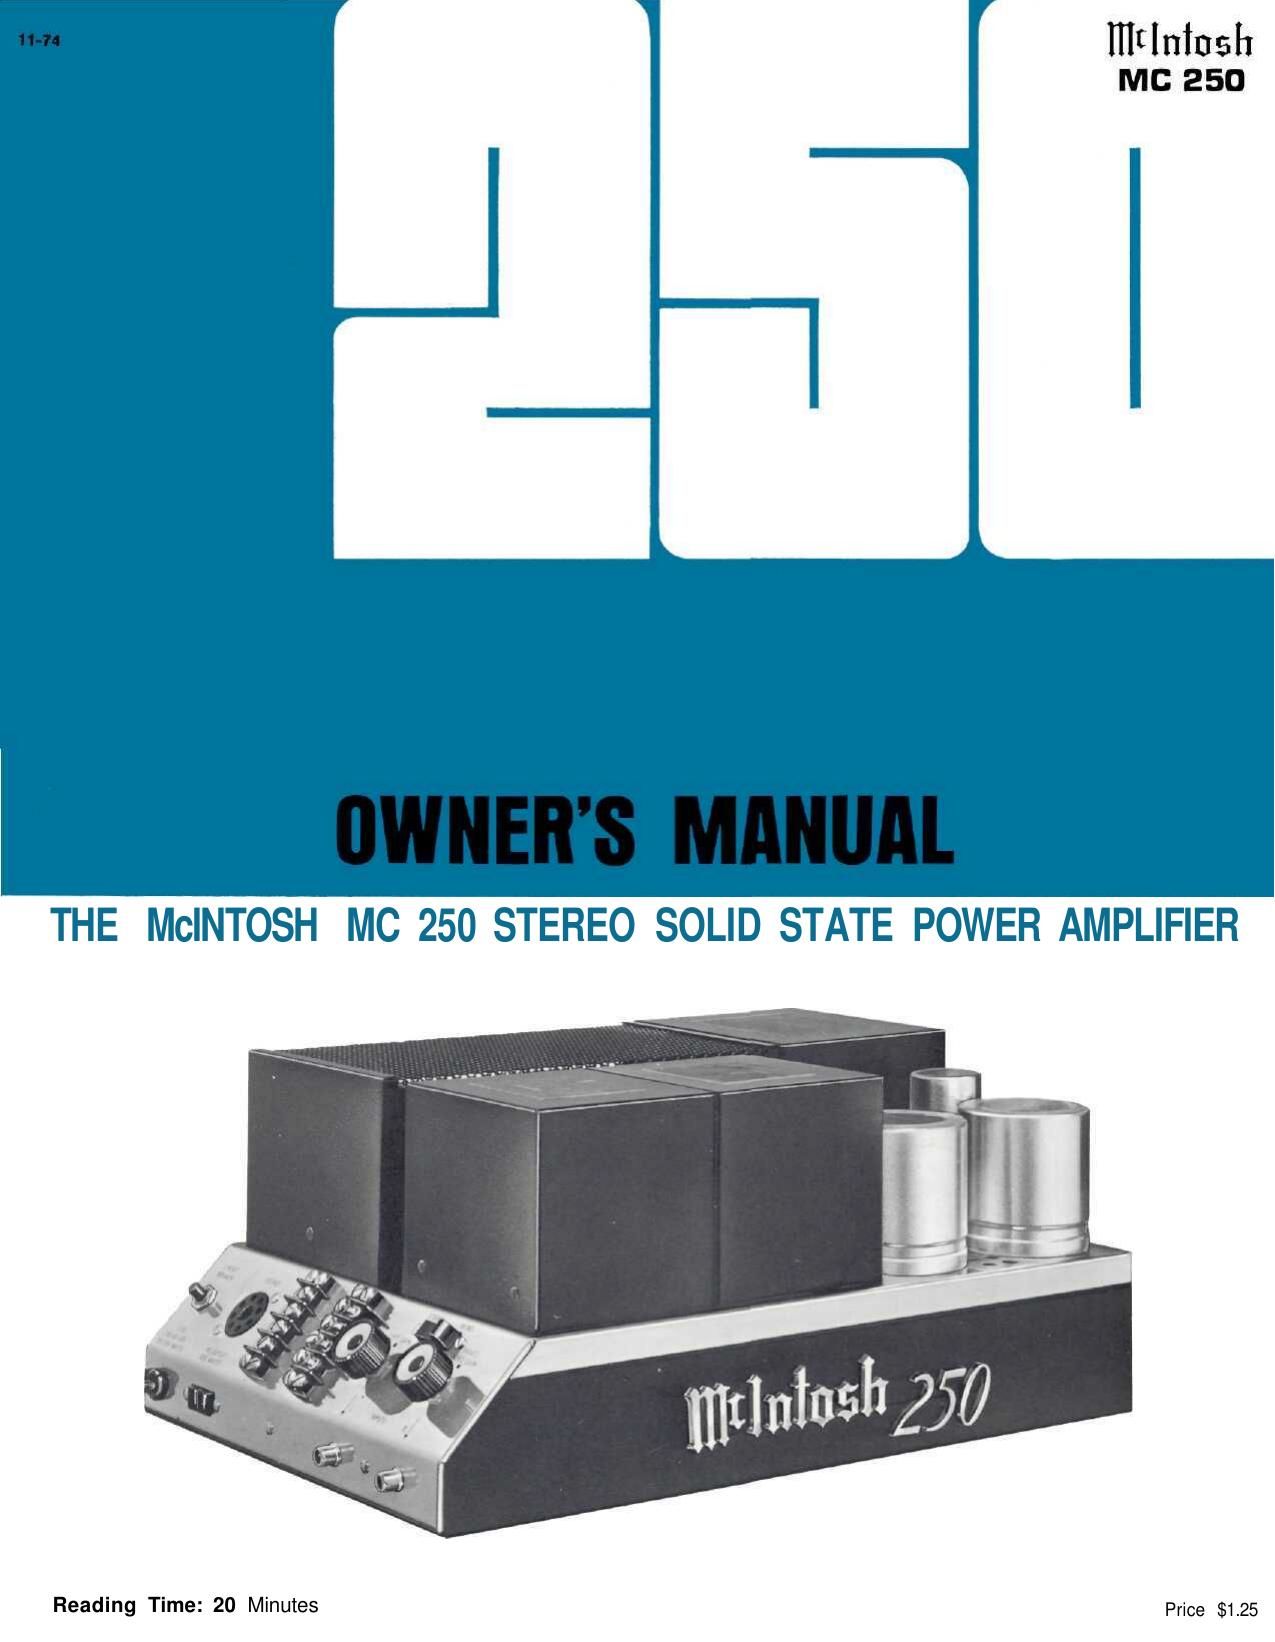 McIntosh MC 250 Owners Manual